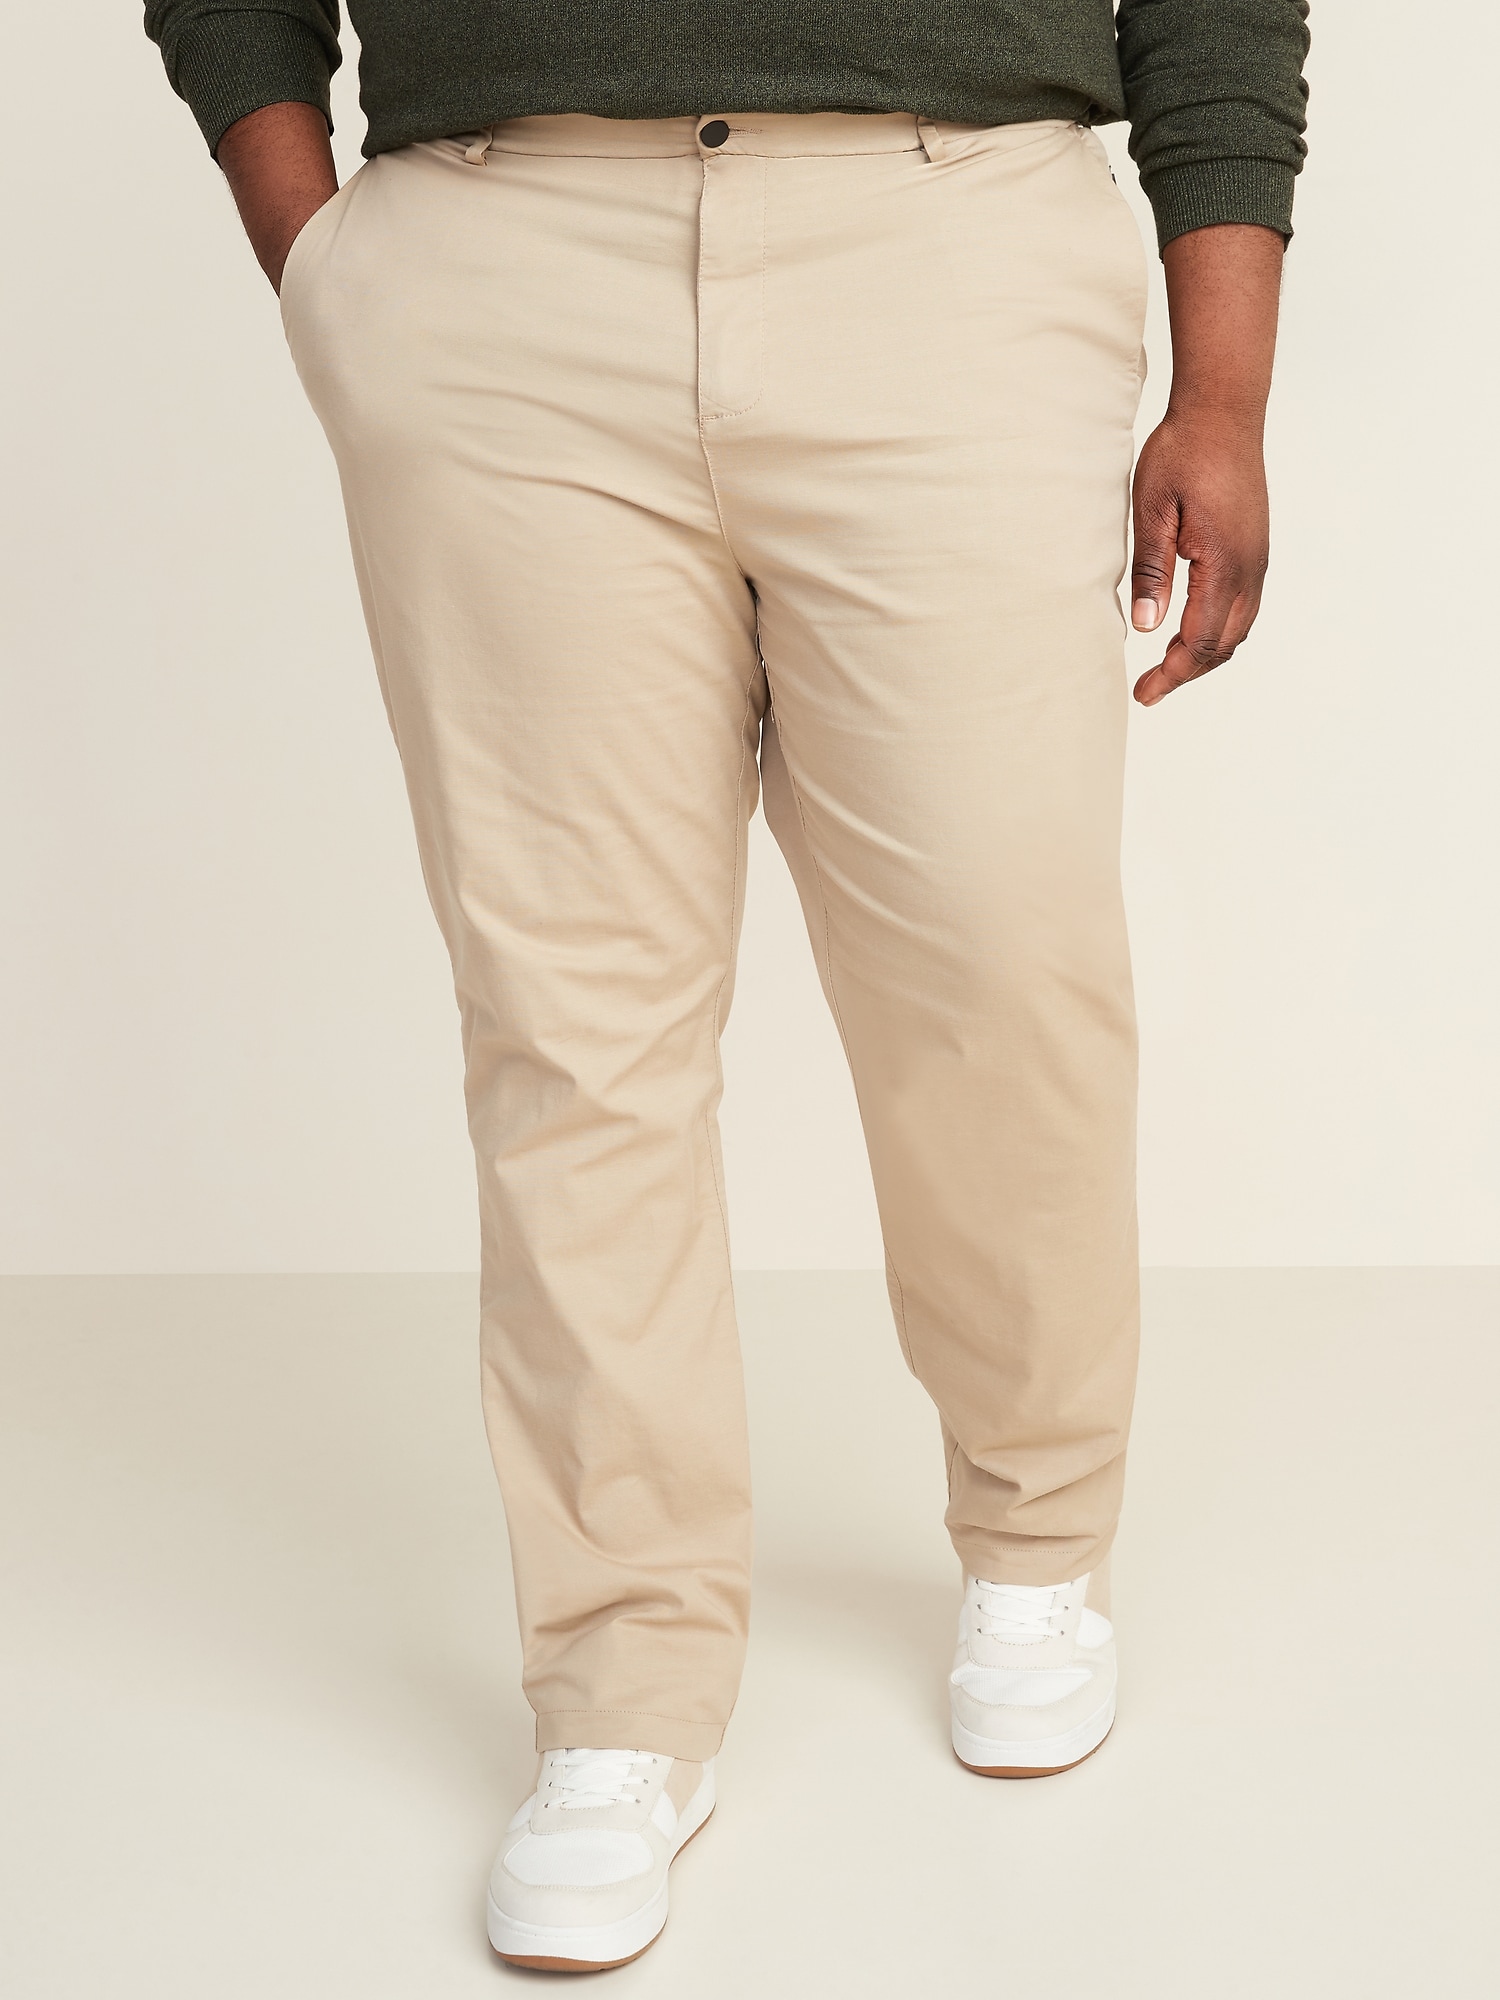 Slim BuiltIn Flex Ultimate Tech Chino Pants for Men  Old Navy